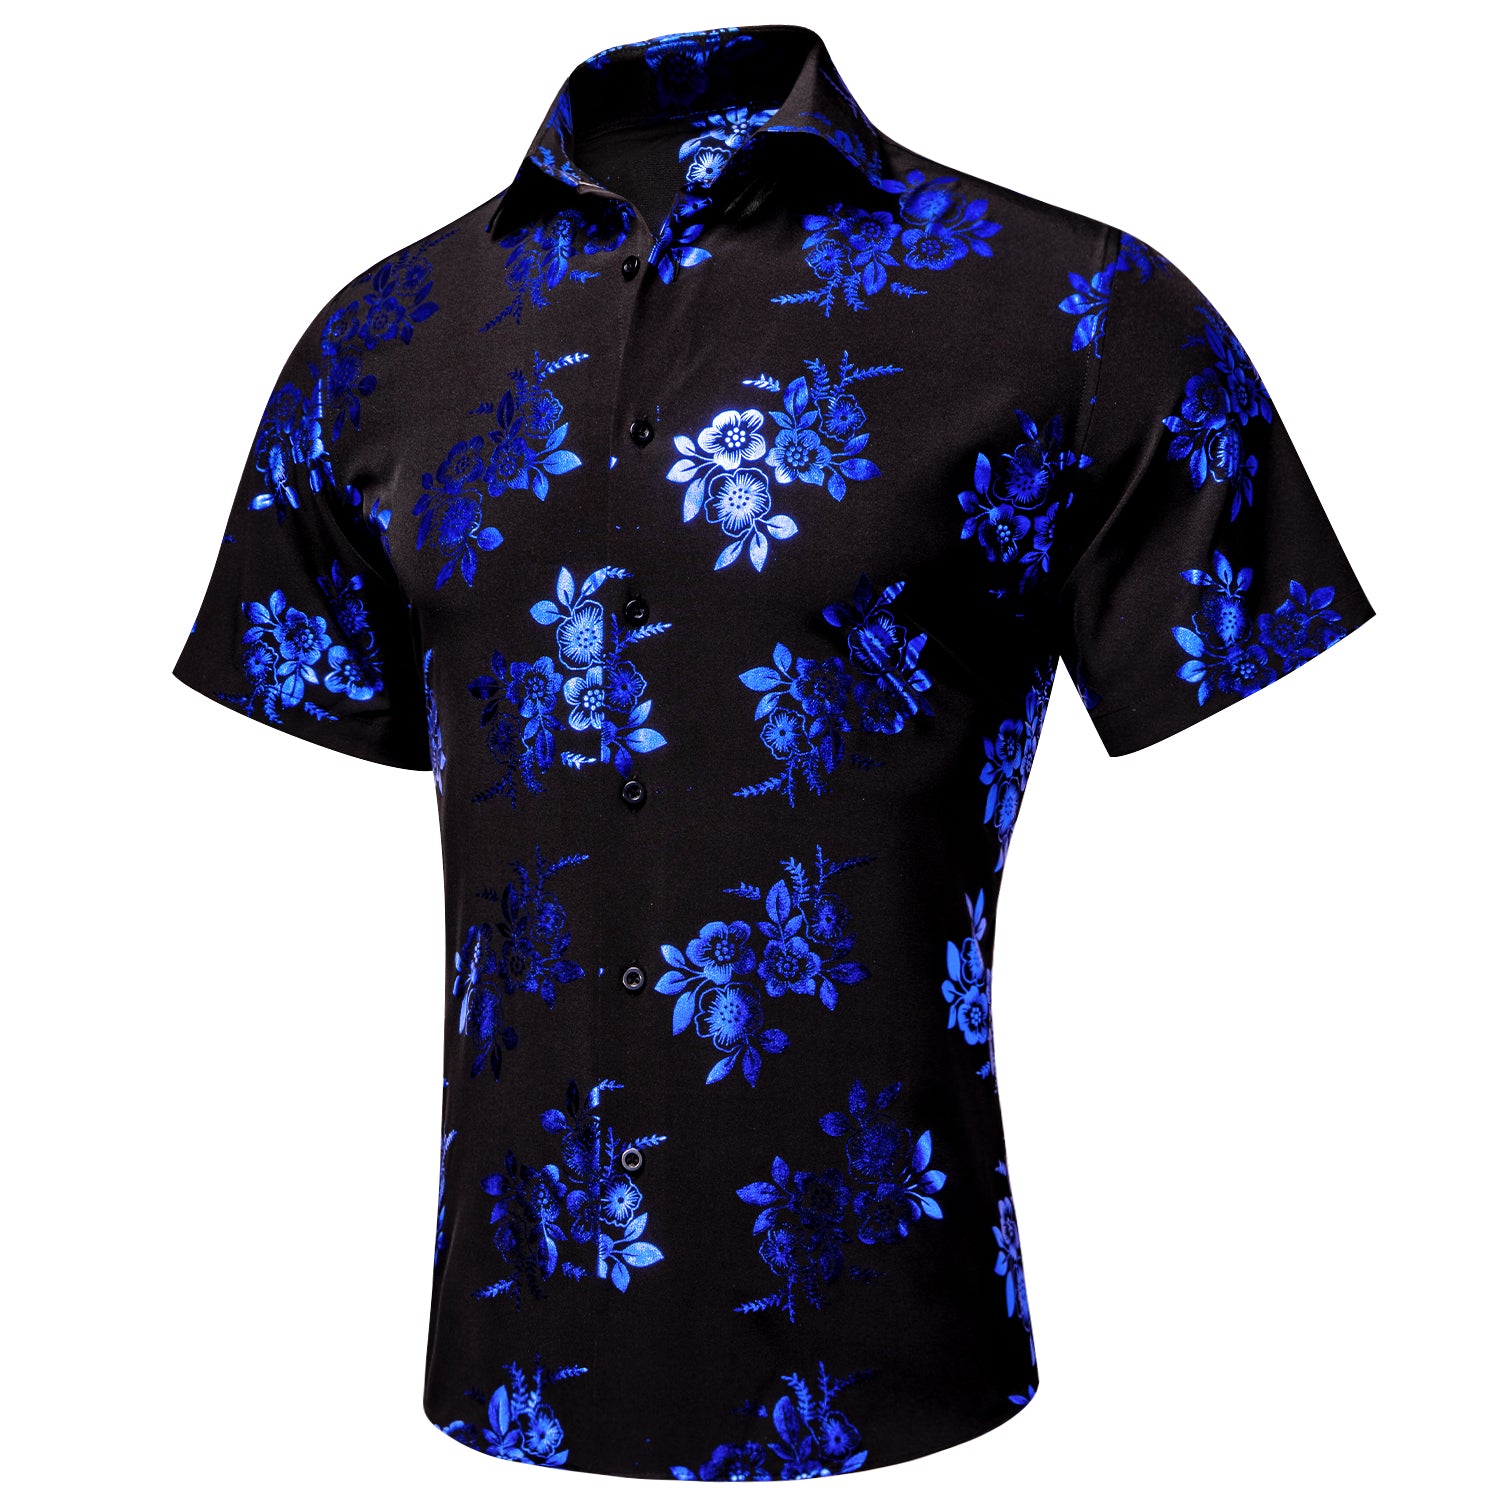 New Black Blue Floral Men's Short Sleeve Shirt